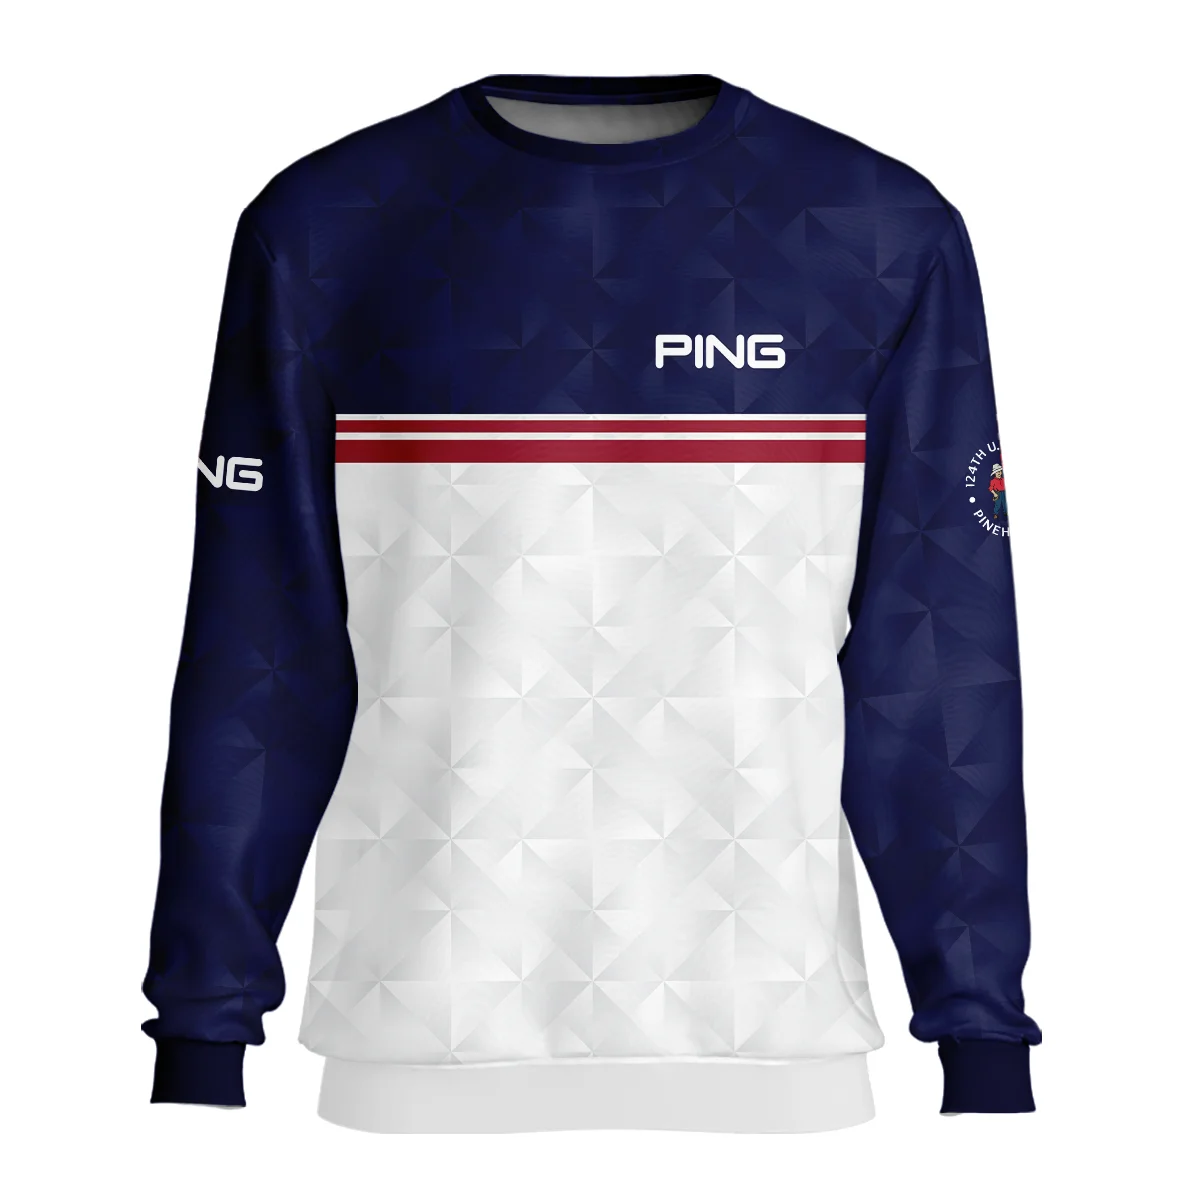 Golf Sport 124th U.S. Open Pinehurst Ping Polo Shirt Dark Blue White Abstract Geometric Triangles All Over Print Polo Shirt For Men